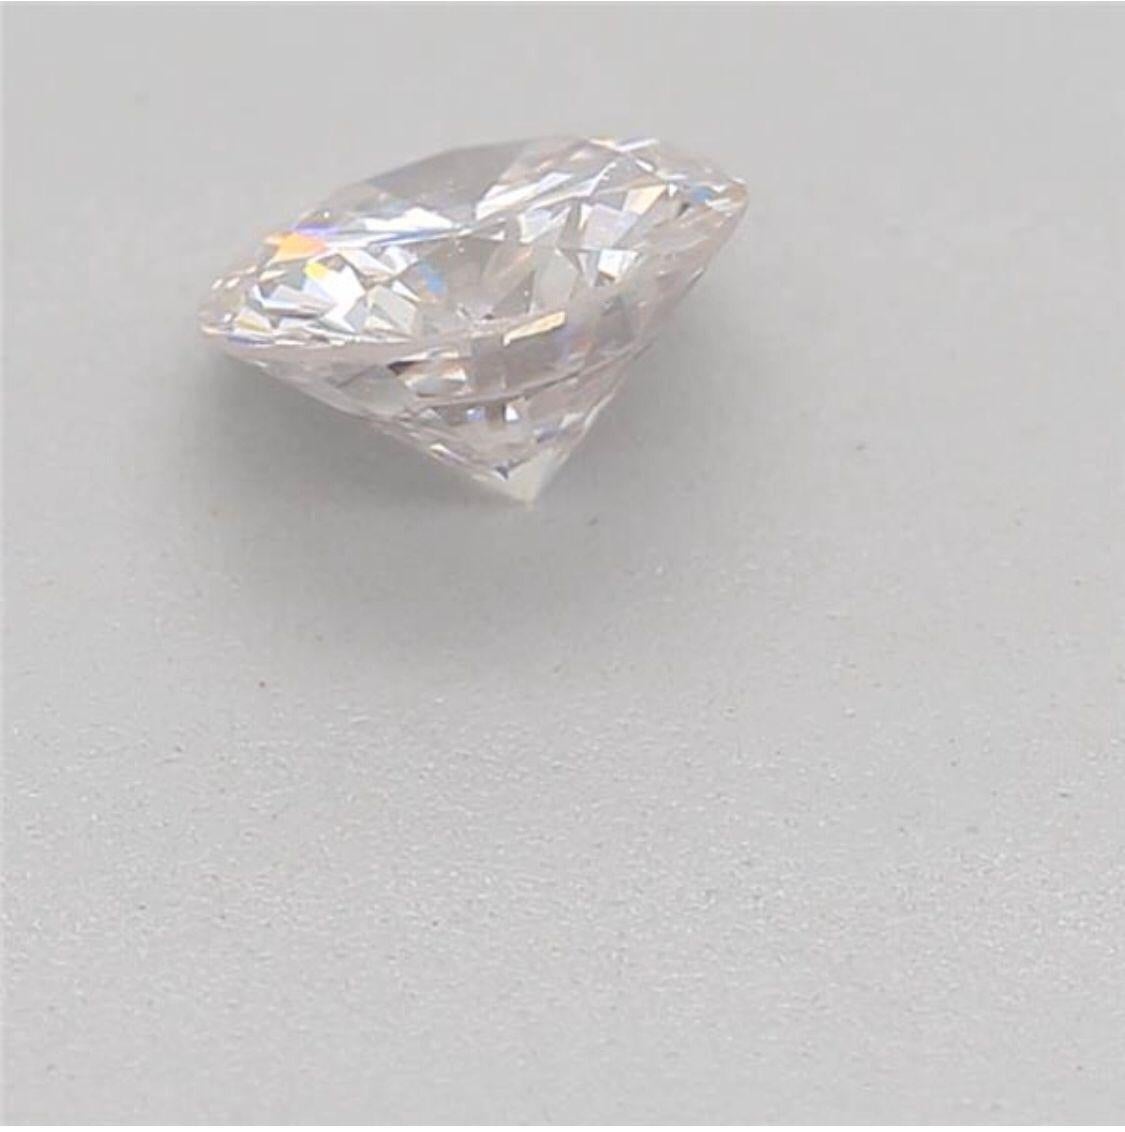 Diamant rose pâle taille ronde de 0,31 carat de pureté SI1 certifié CGL en vente 4